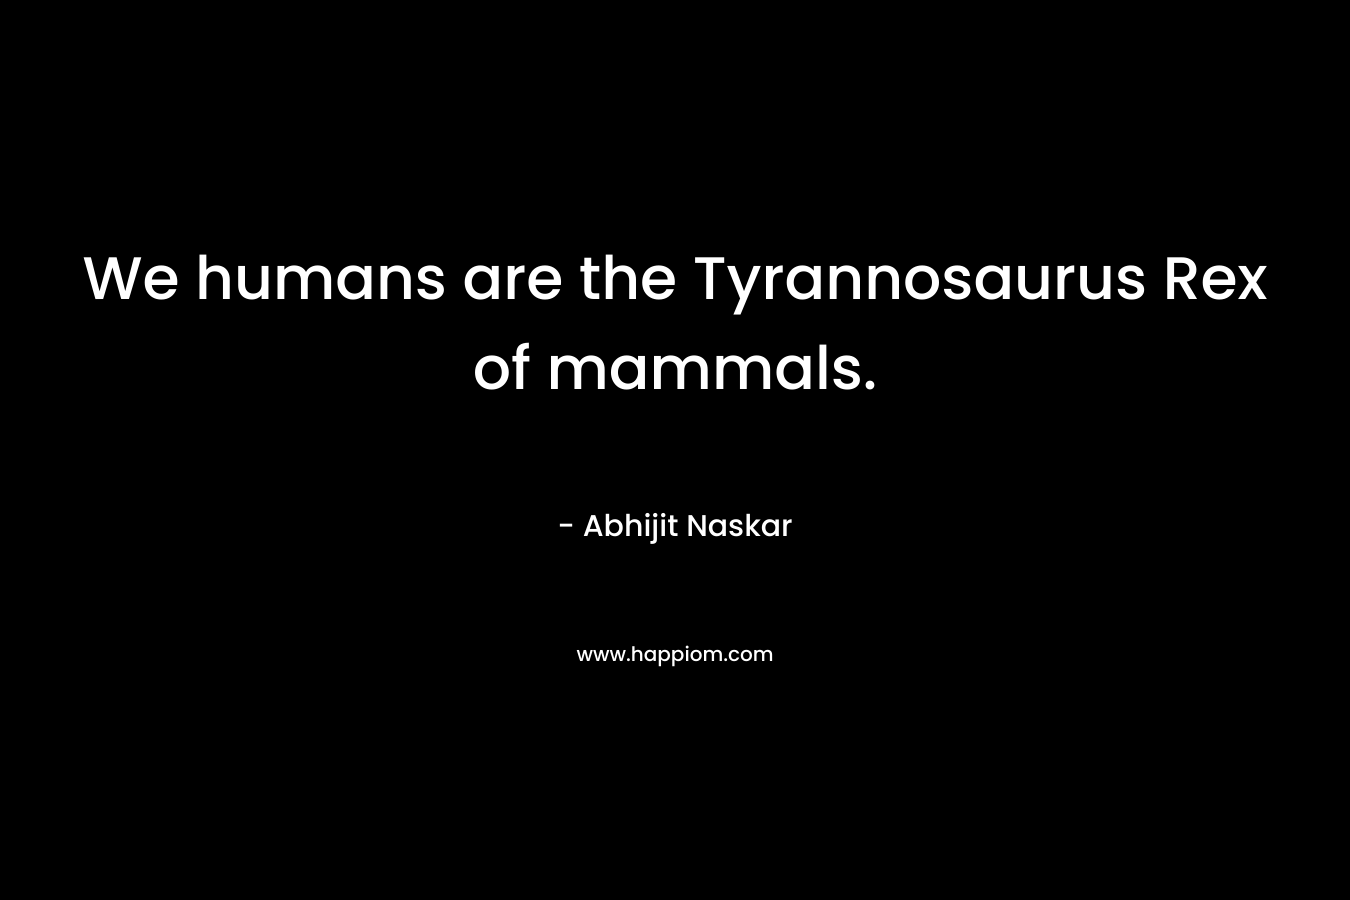 We humans are the Tyrannosaurus Rex of mammals.